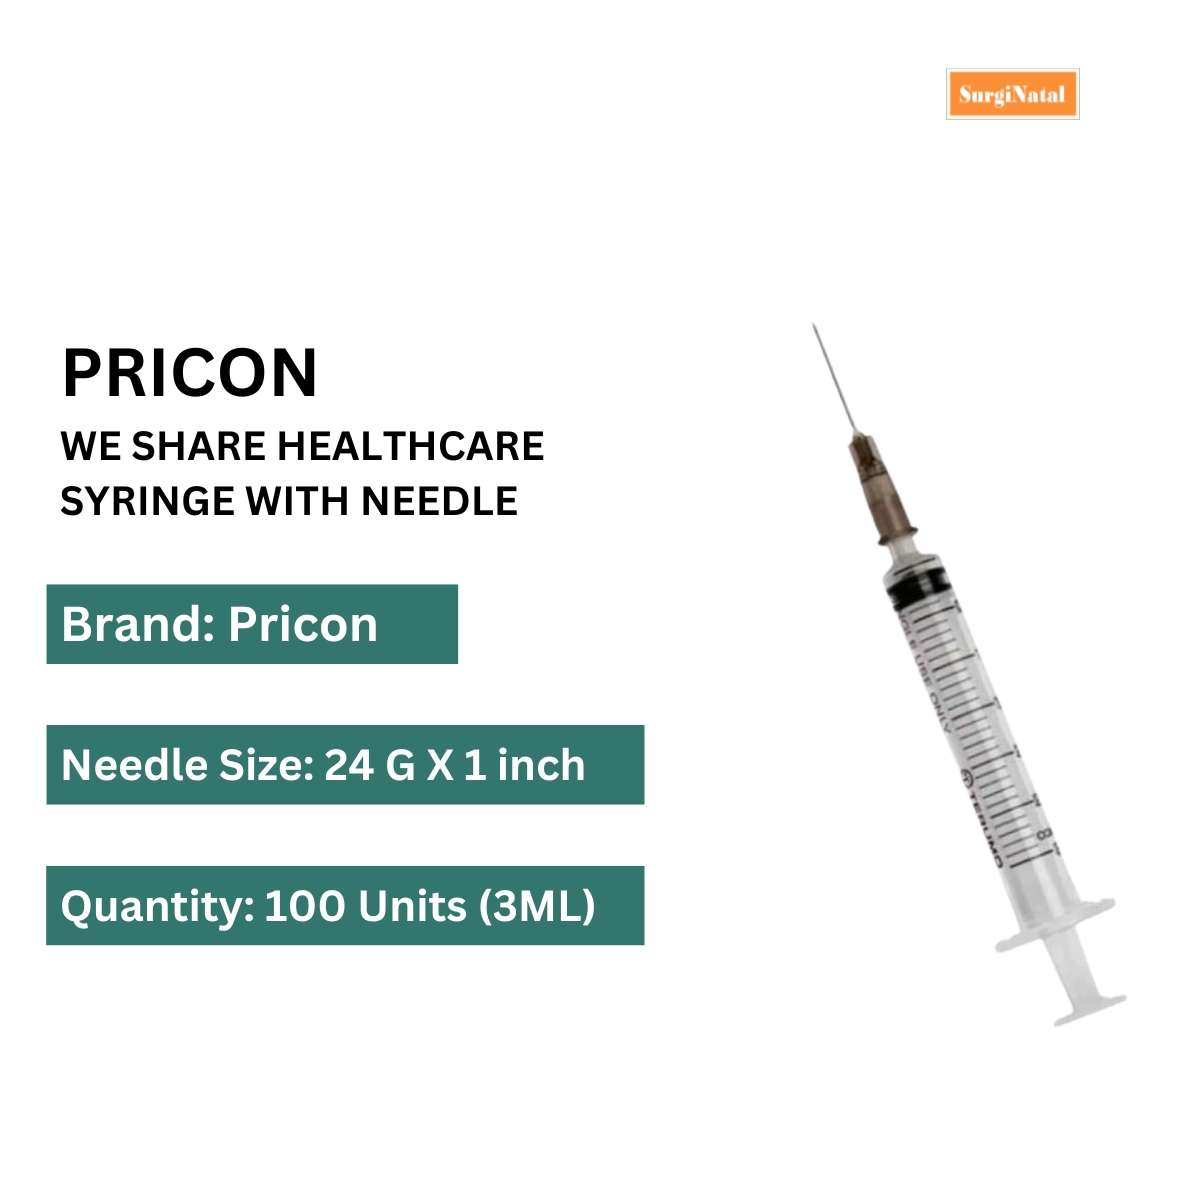 pricon 3ml syringe with needle - 100 units pack